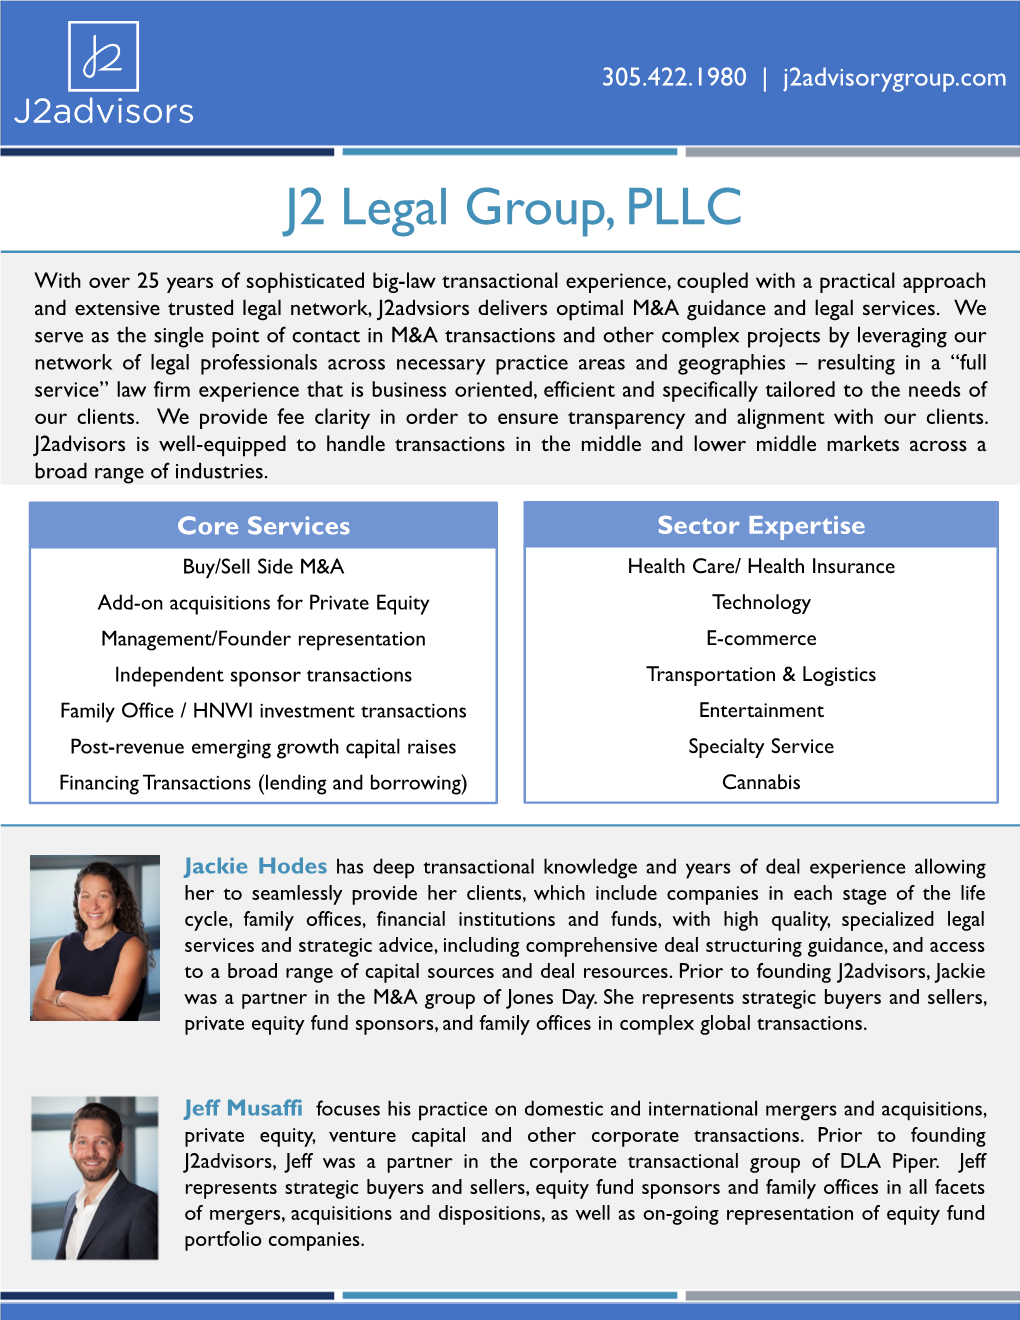 J2 Legal Group, PLLC